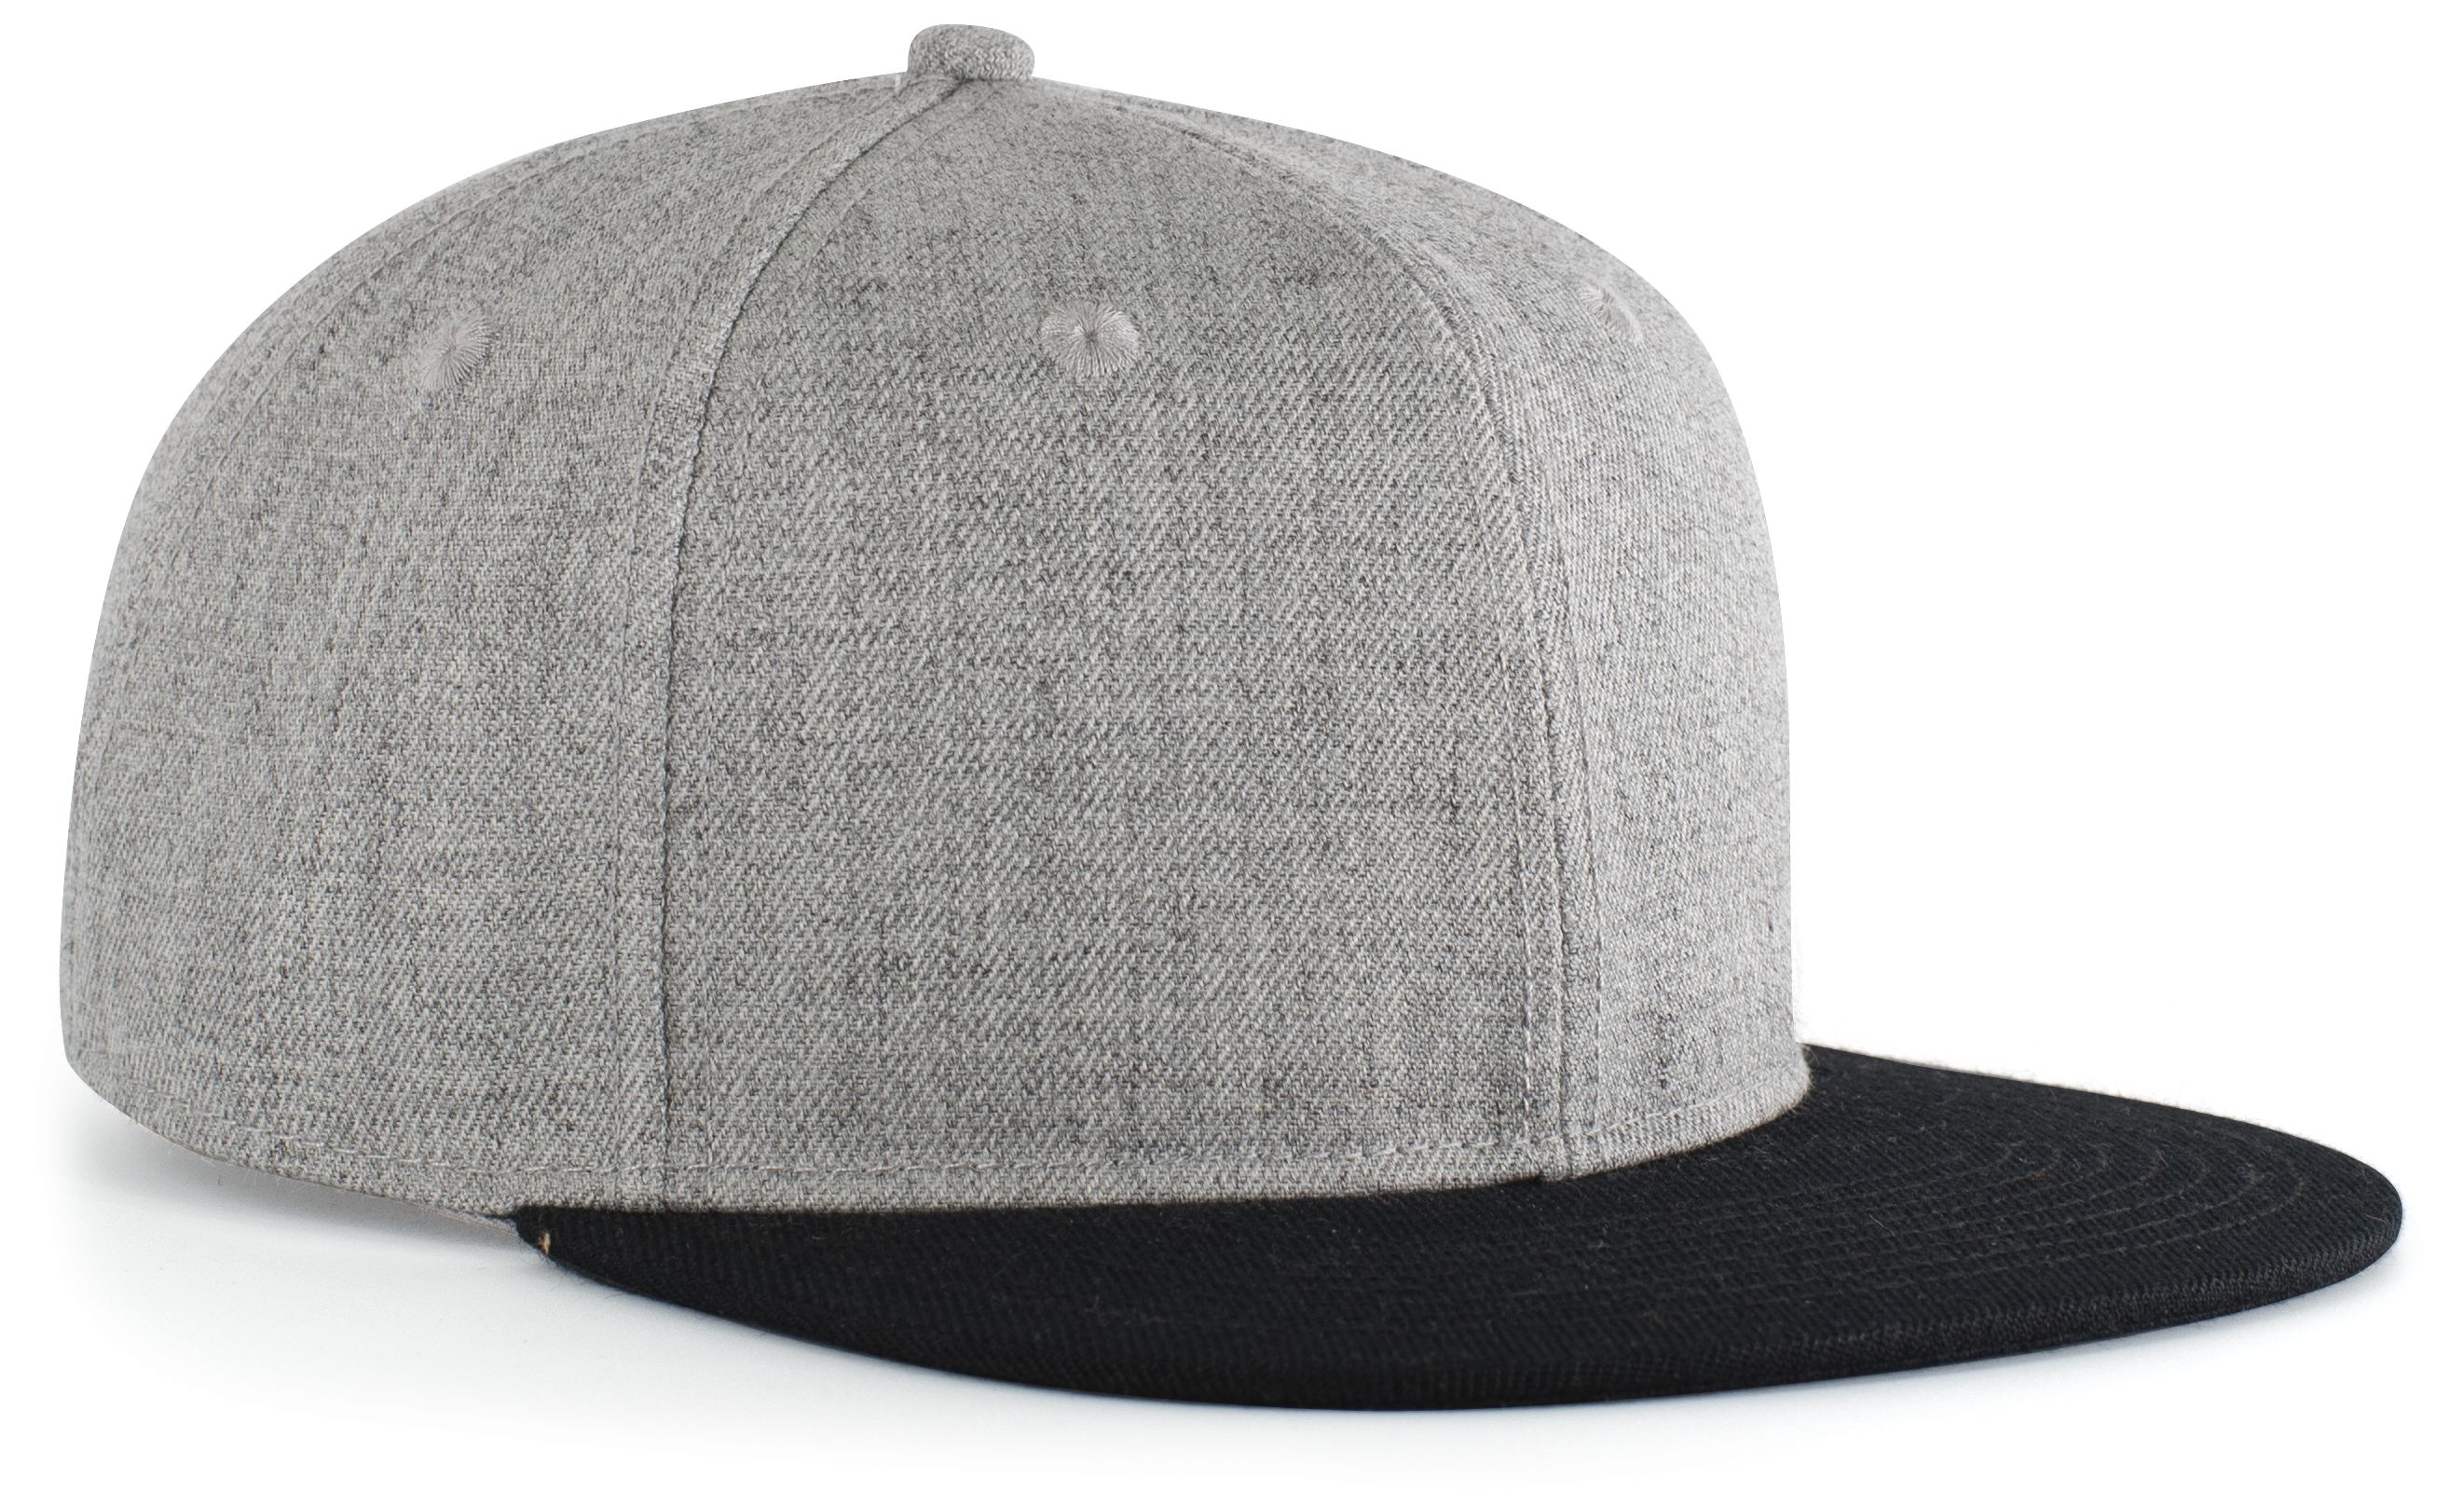 Premium Heather Wool Blend Flat Bill Adjustable Snapback Hats Baseball Caps